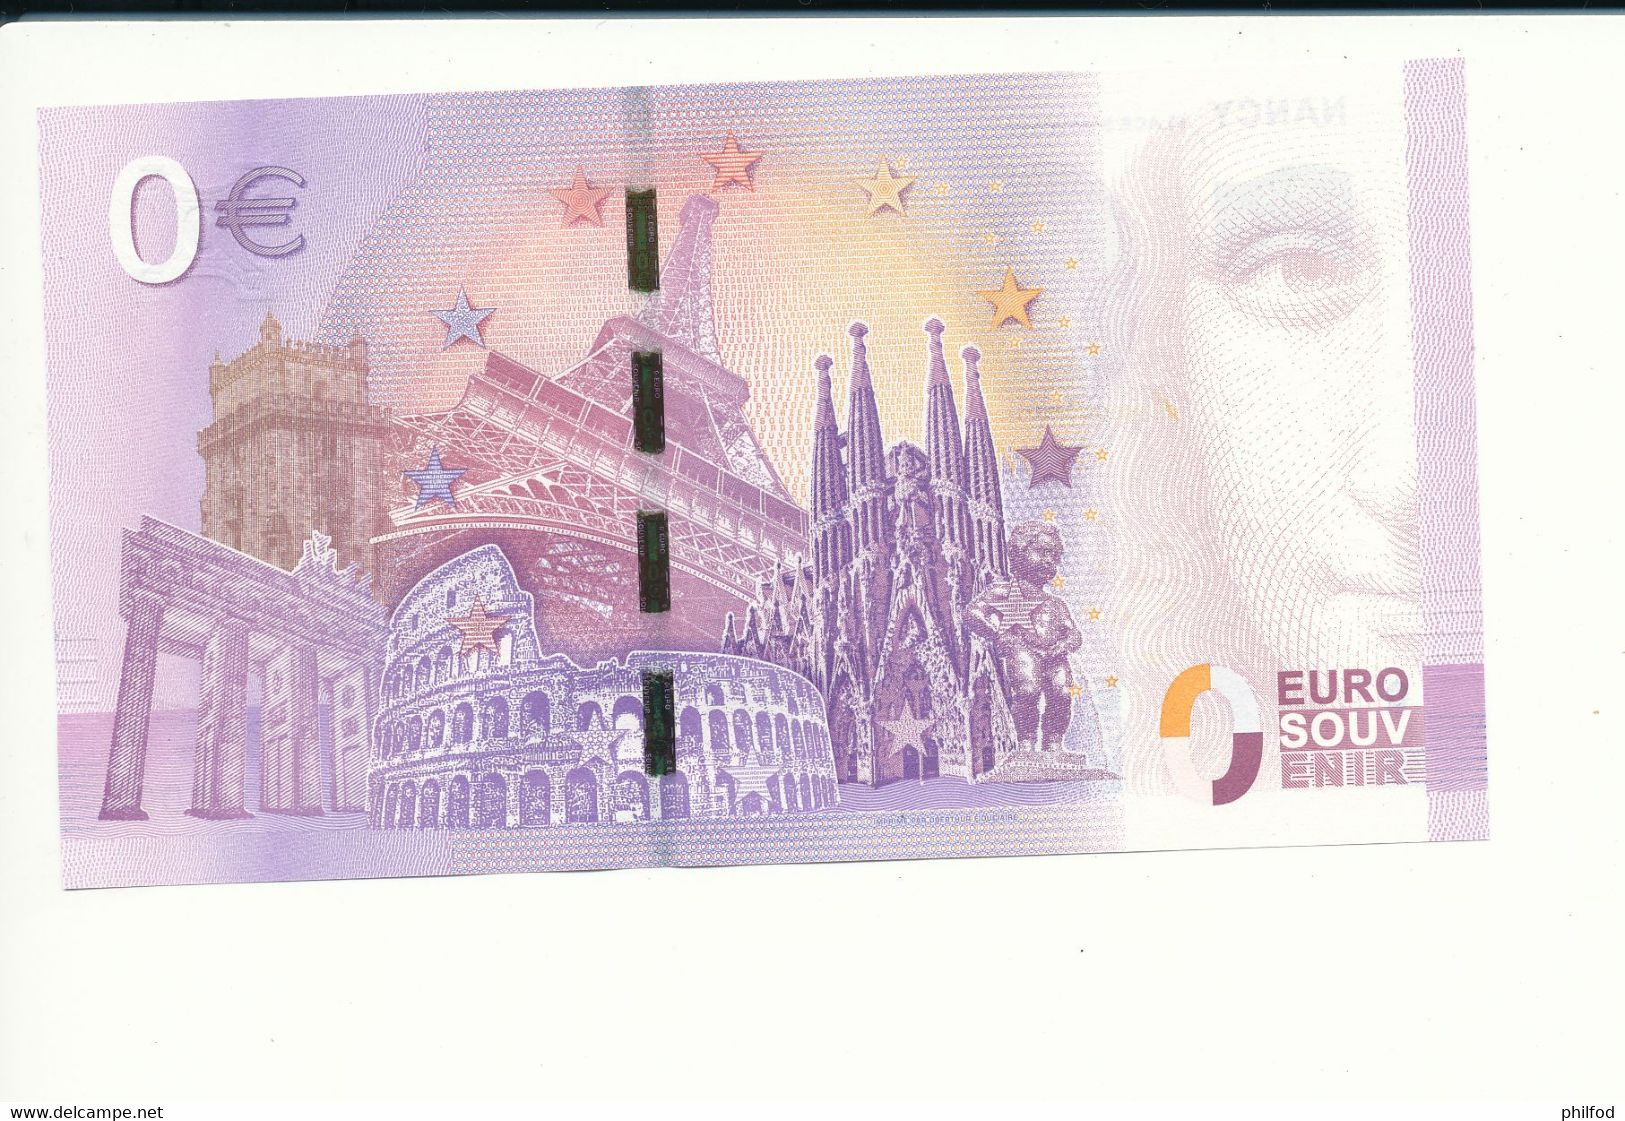 Billet Souvenir - 0 Euro - UEFA - 2017-2 - NANCY PLACE STANISLAS -  N° 2009 - Billet épuisé - Kilowaar - Bankbiljetten